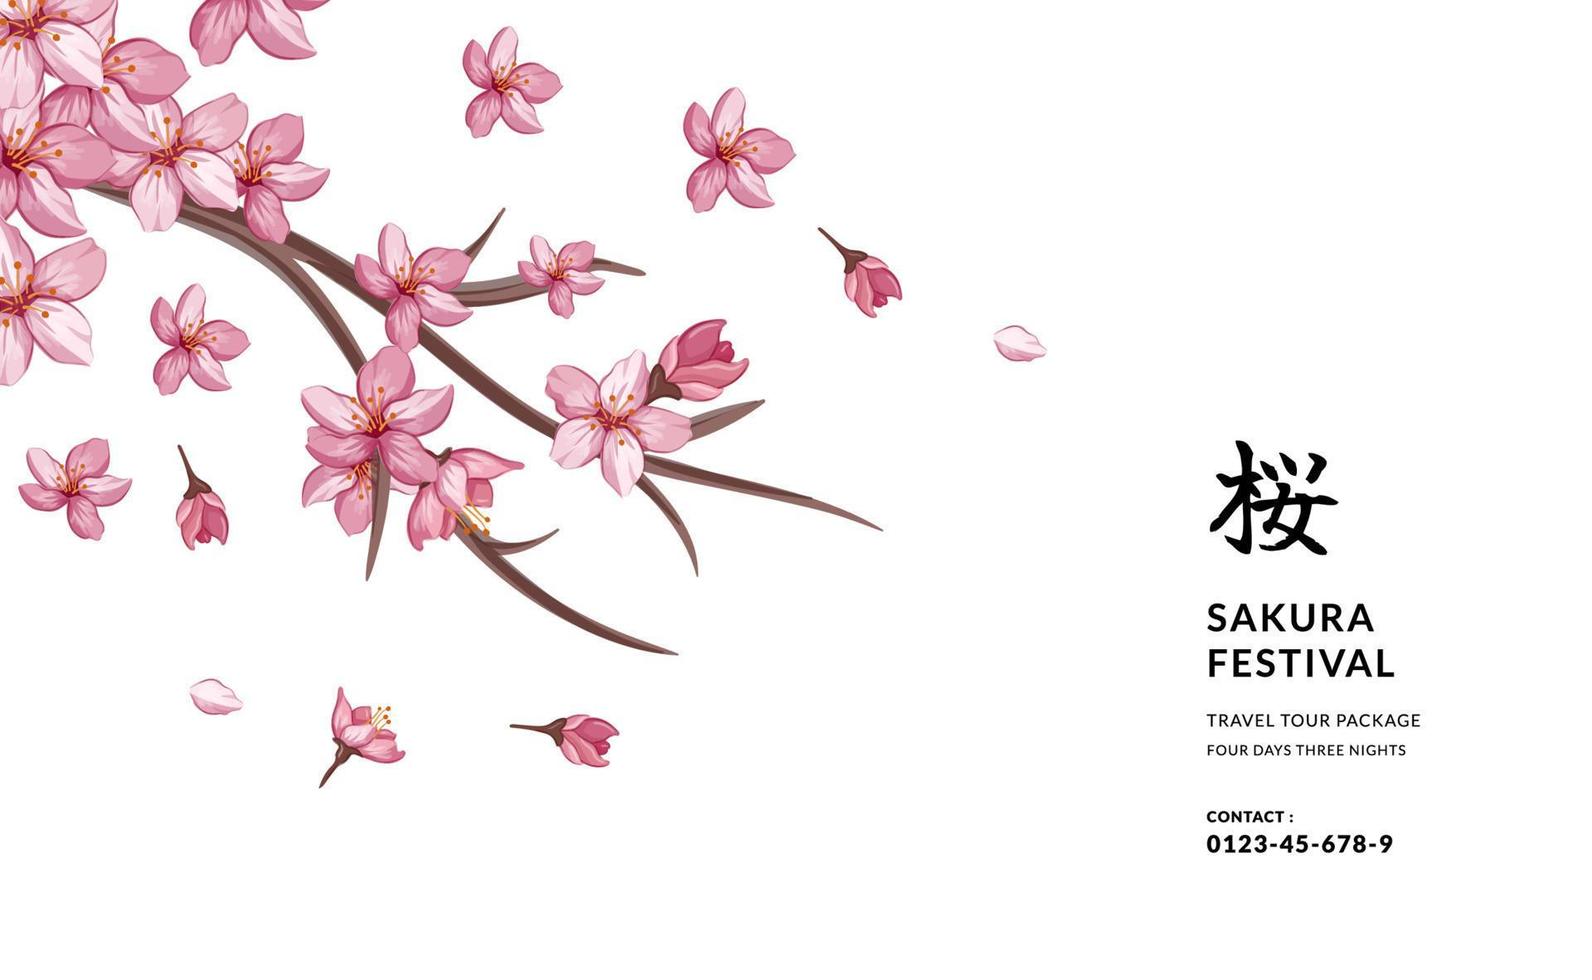 Sakura Flower Cherry blossom natural japan asian tour travel abroad poster banner greeting card vector